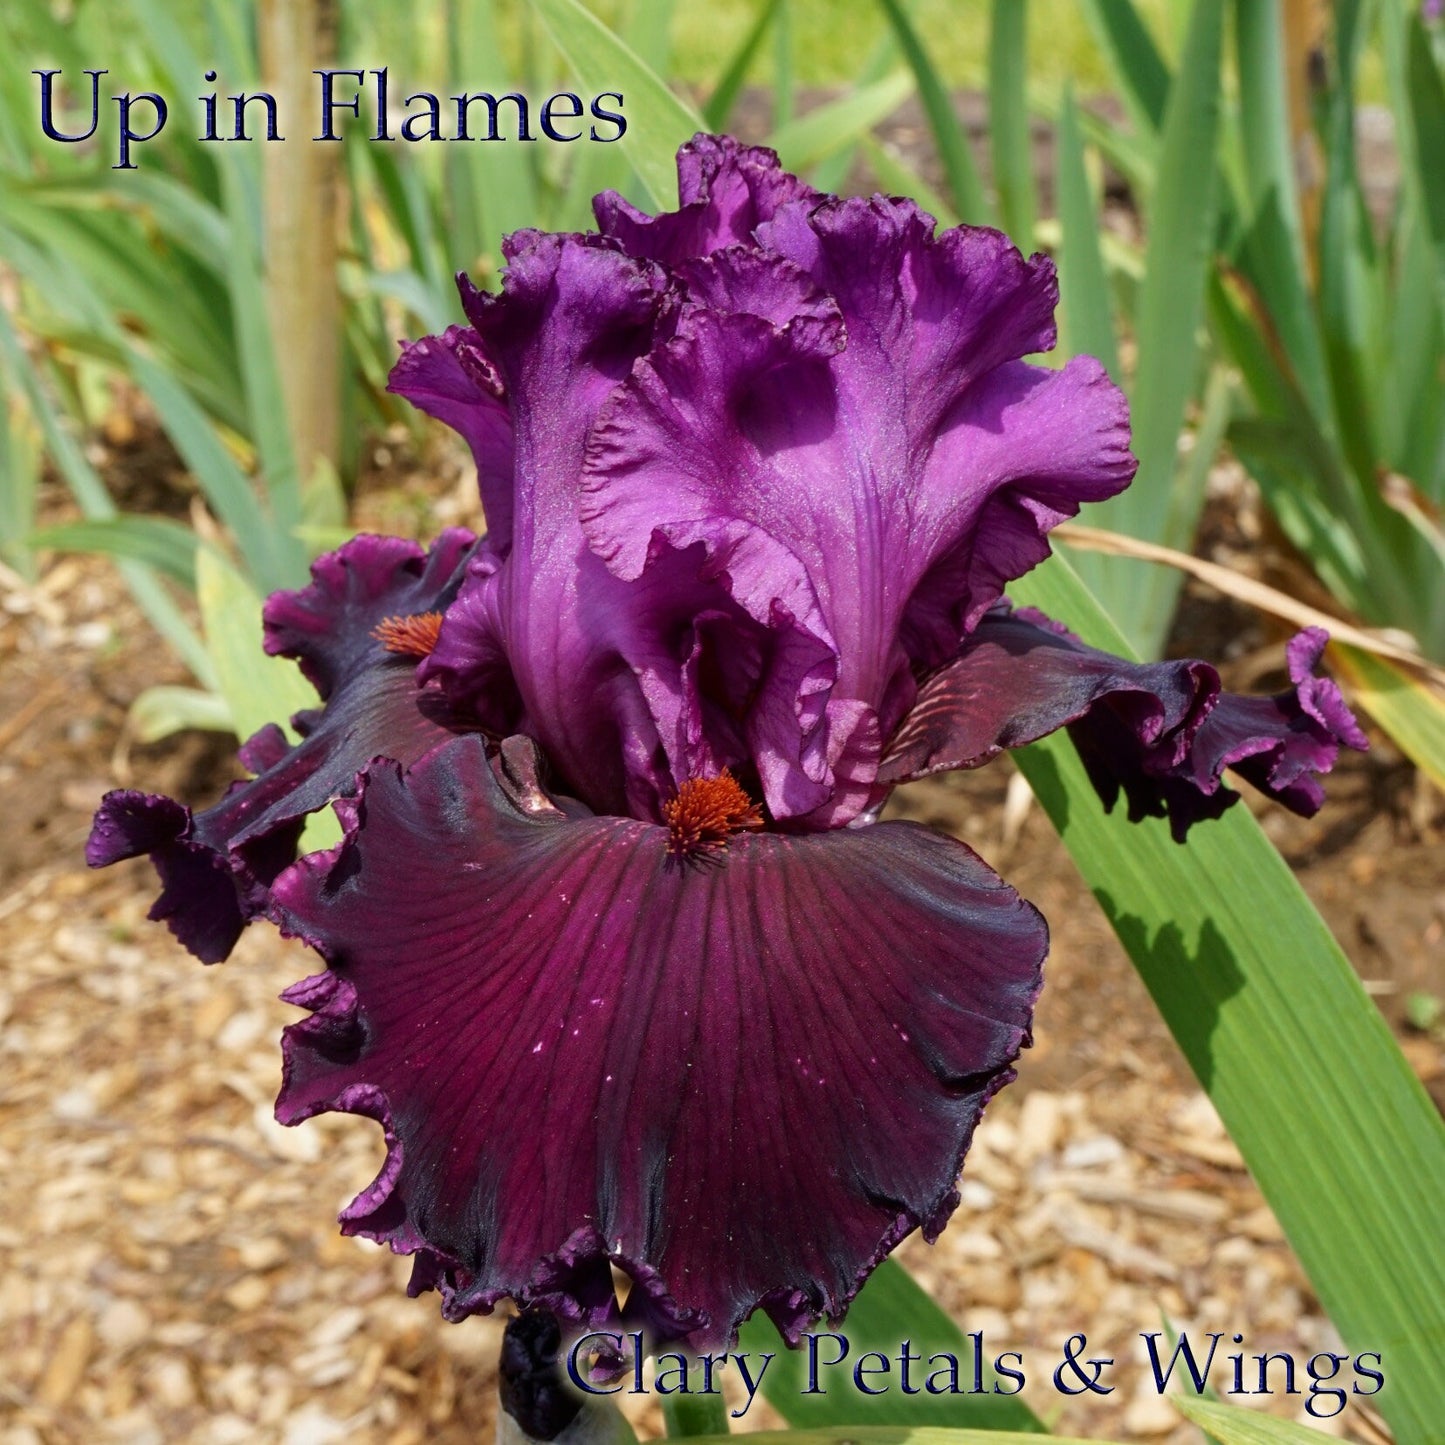 UP IN FLAMES - 2010 Tall Bearded Iris -  A fragrant award winner